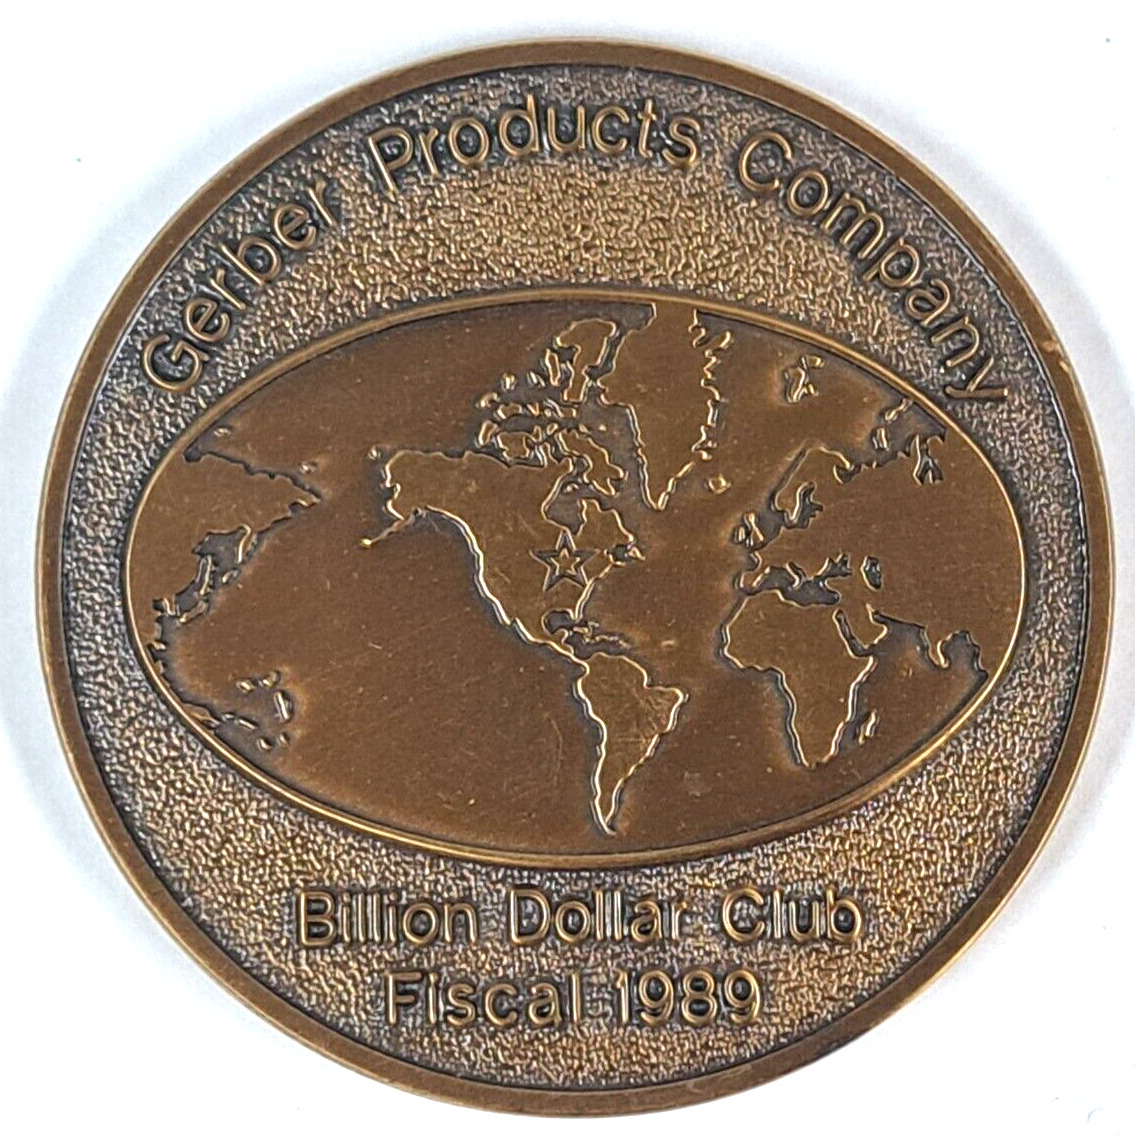 Gerber Products Company Billion Dollar Club Fiscal 1989 metal coin medallion